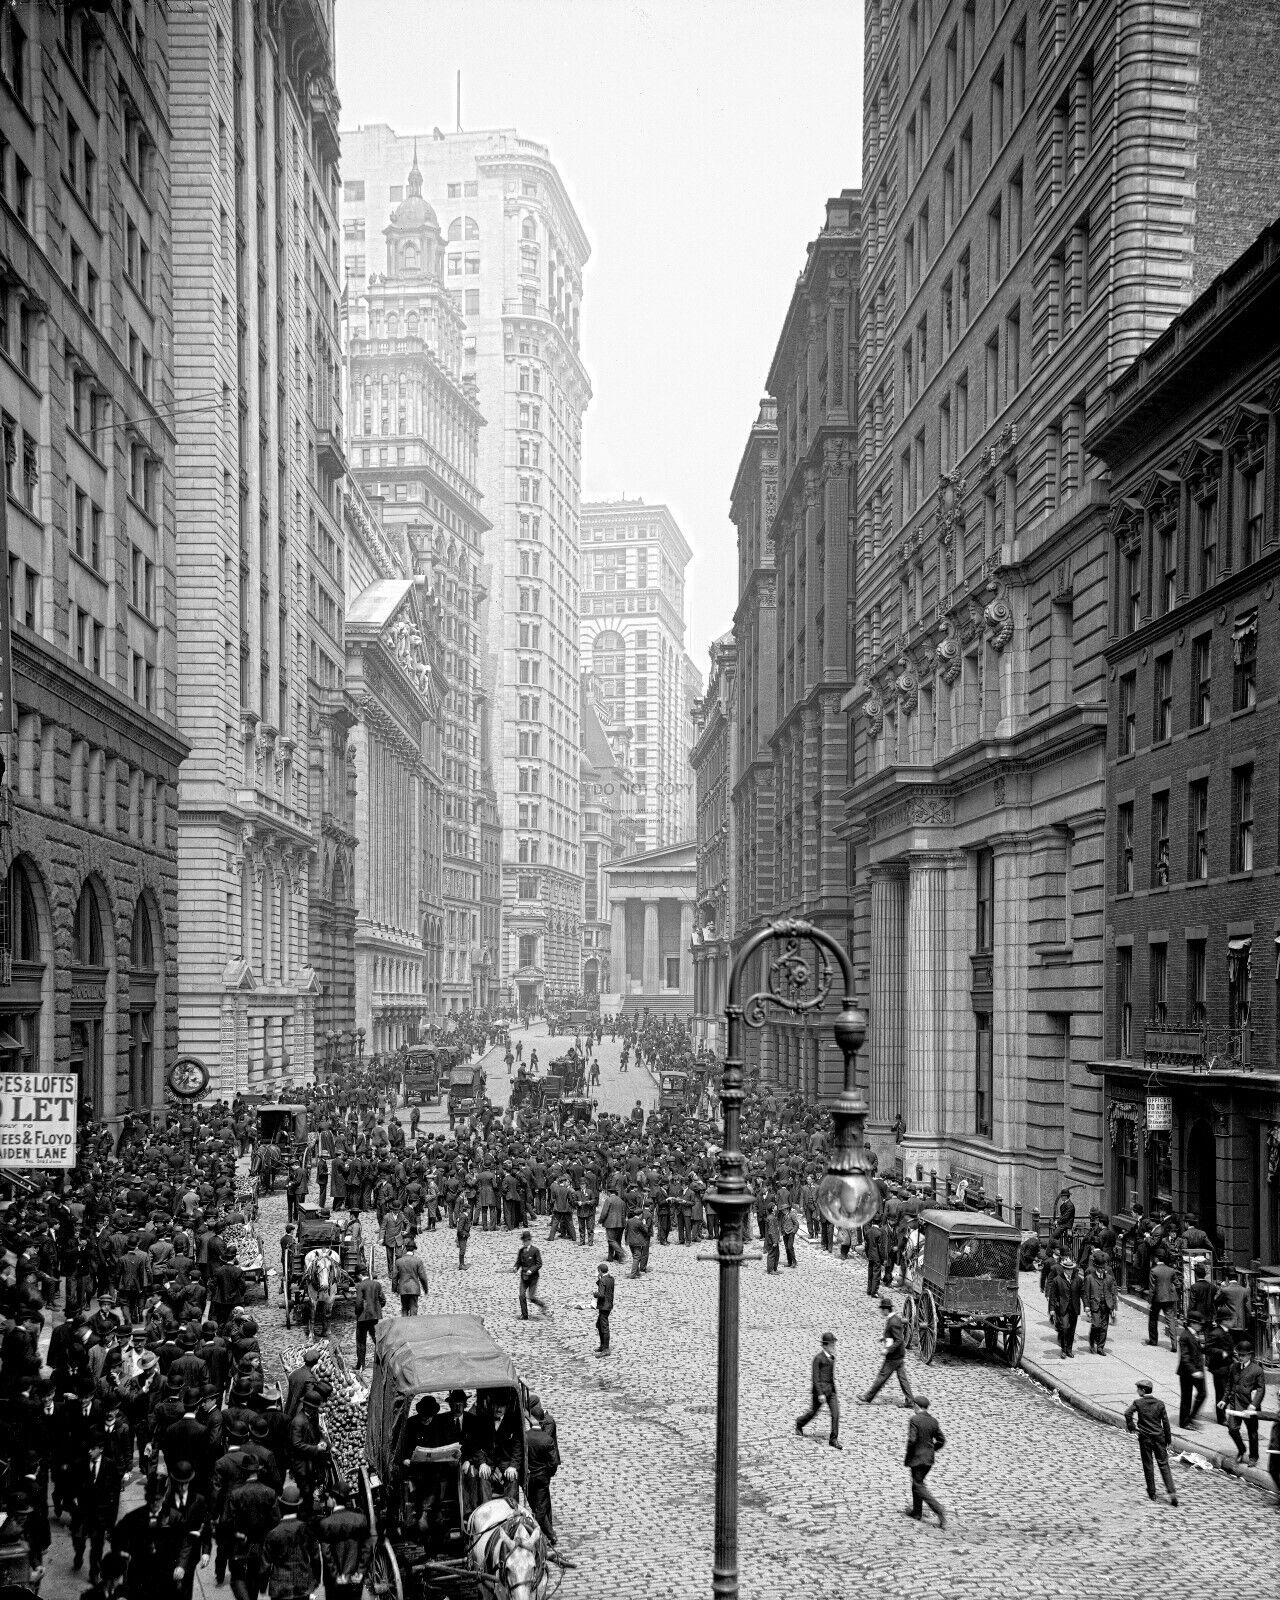 BROAD STREET IN NEW YORK CITY CIRCA, 1905 - 8X10 PHOTO (OP-854)